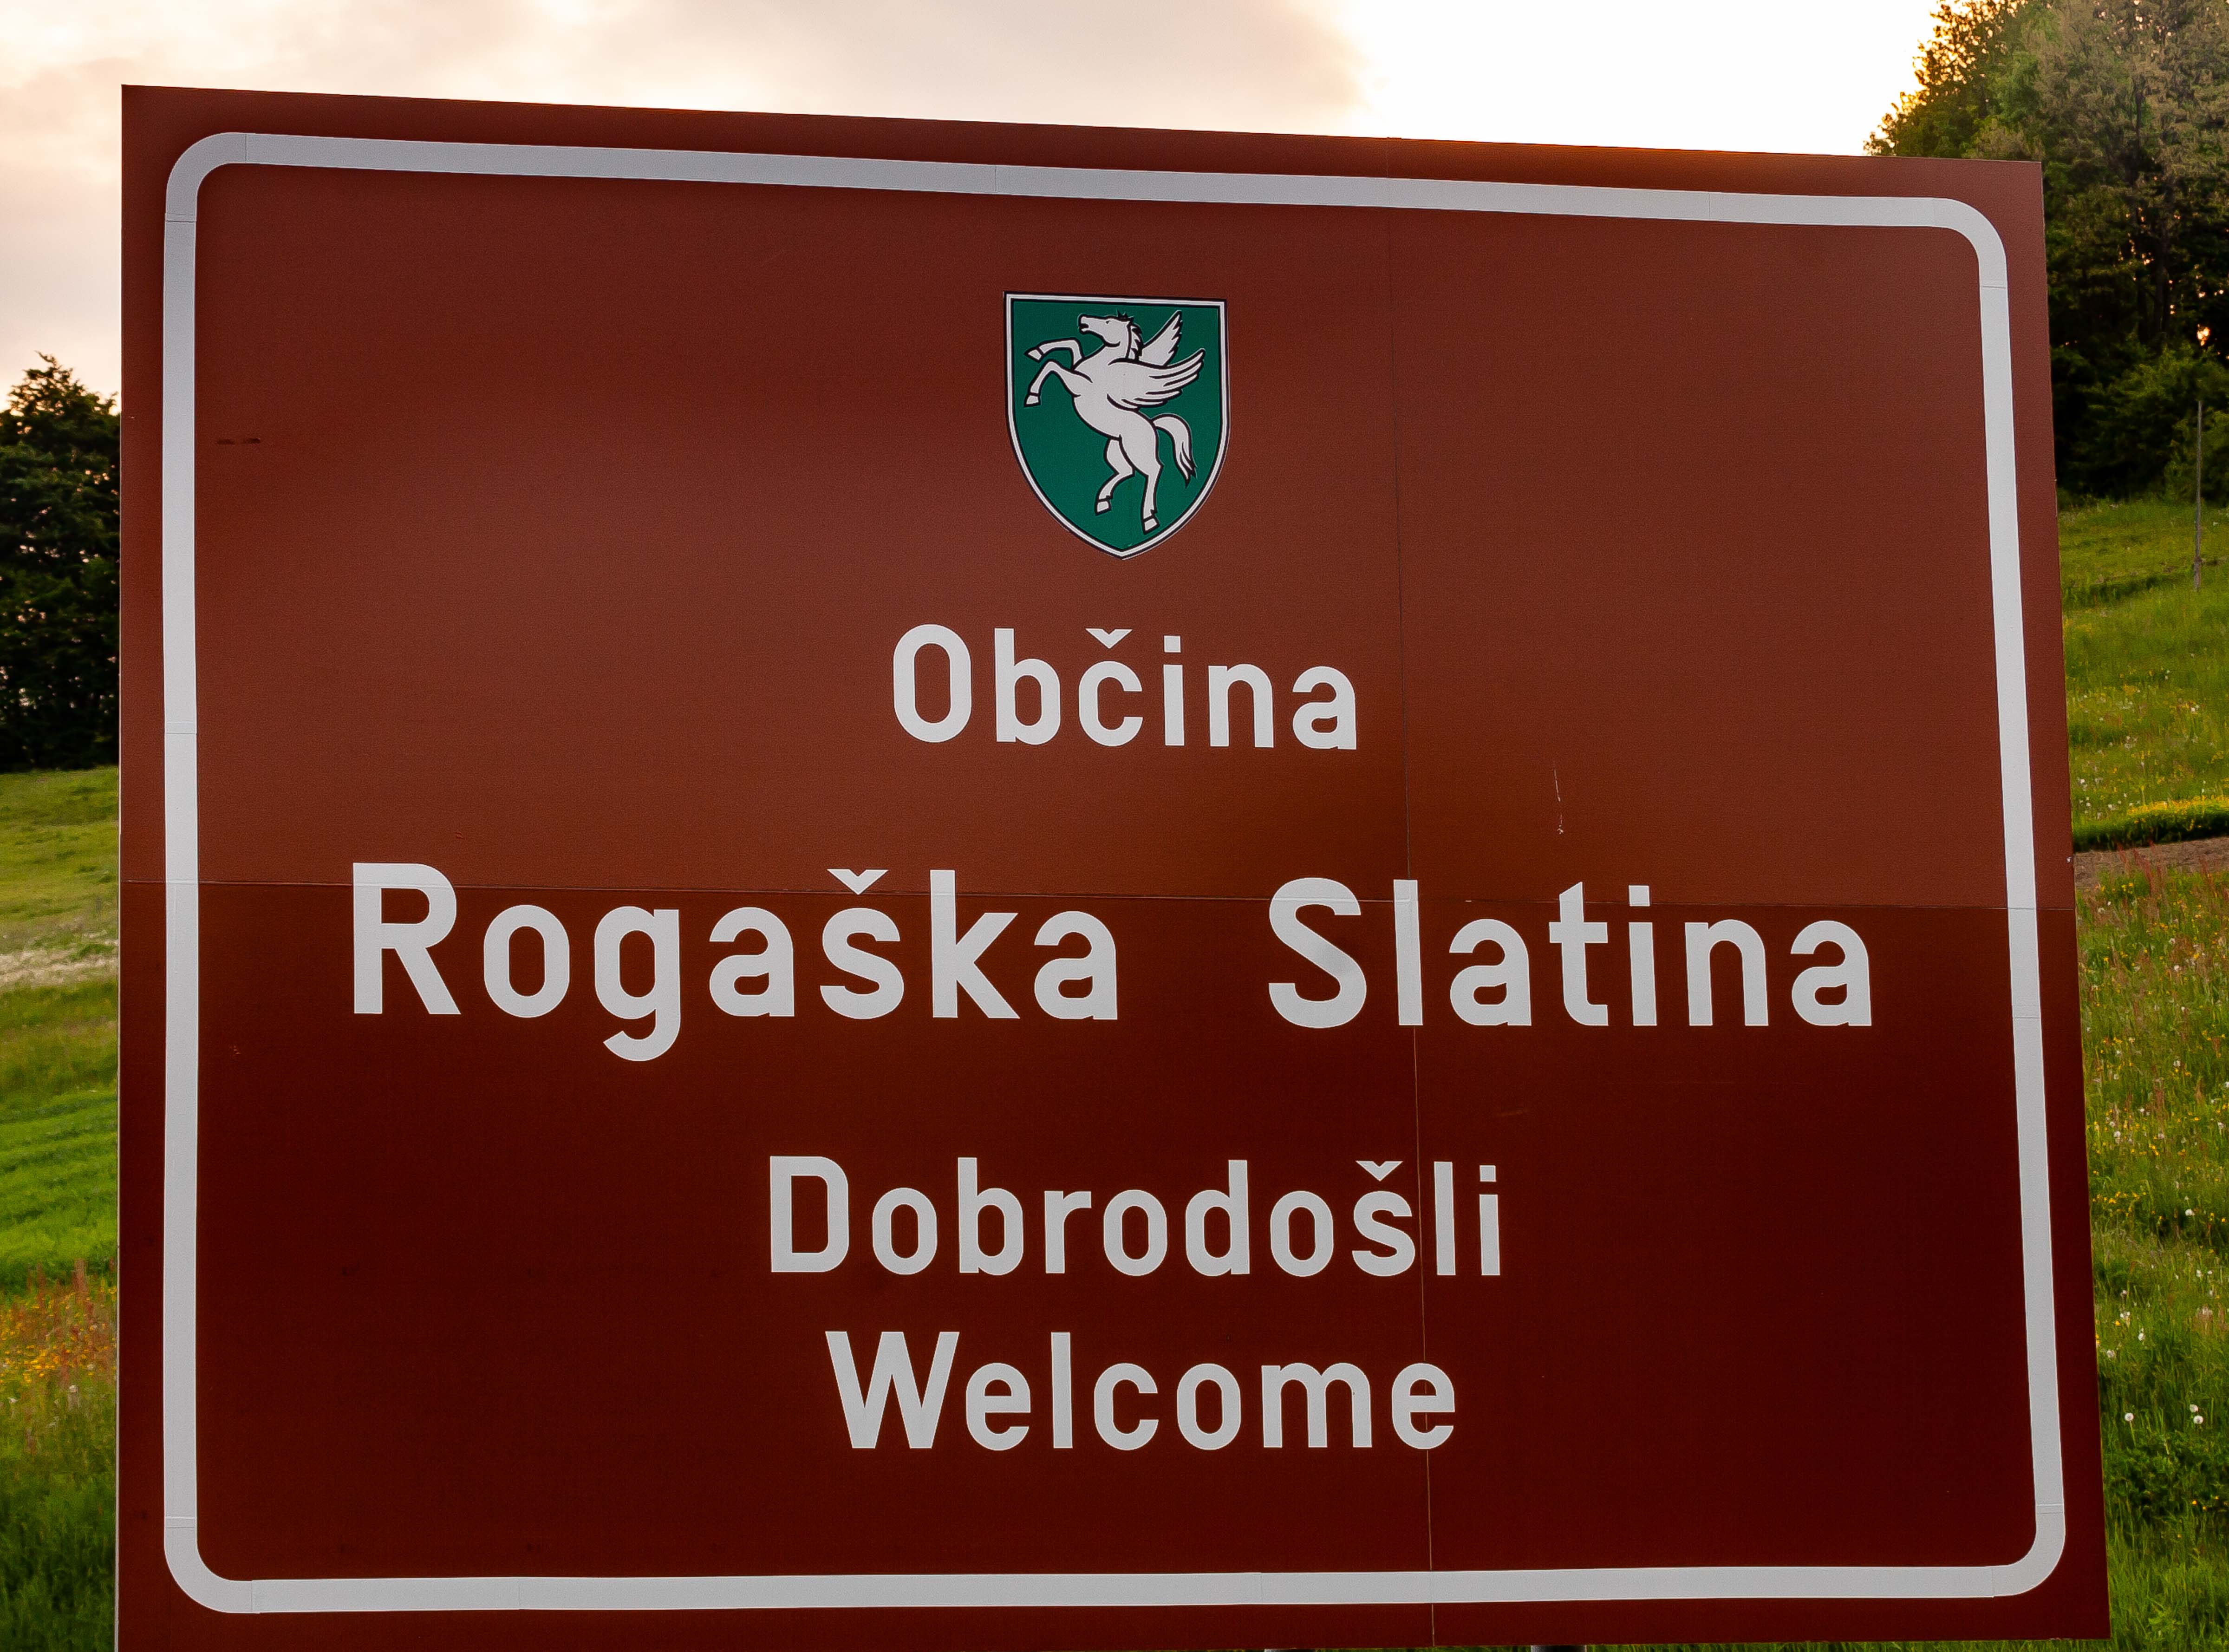 Slovenia, Rogaska Slatina Prov, Dobrodosli Obcina Rogaska Slatina, 2006, IMG 5502